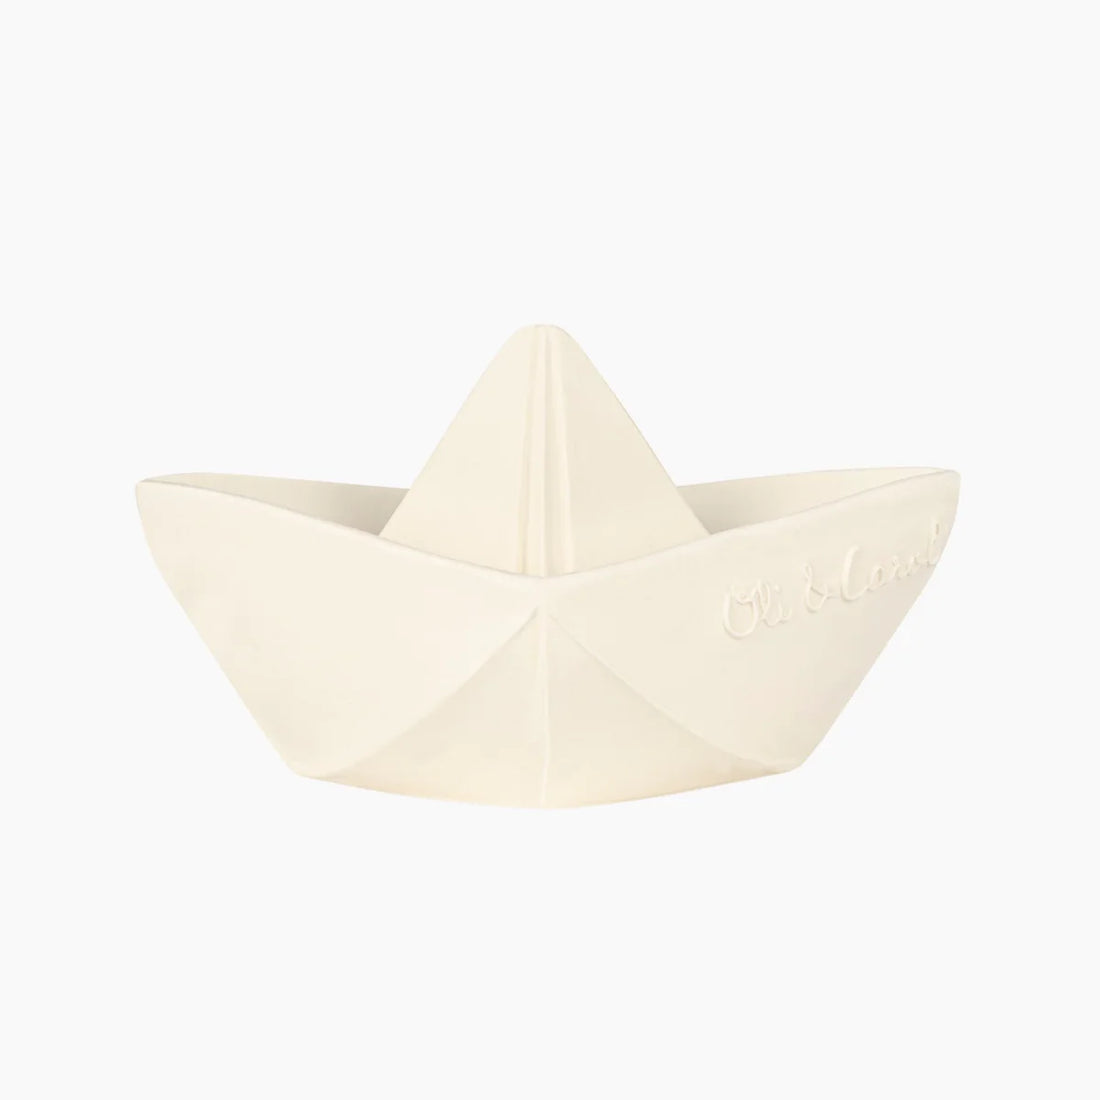 Origami Boat Bath Toy - White